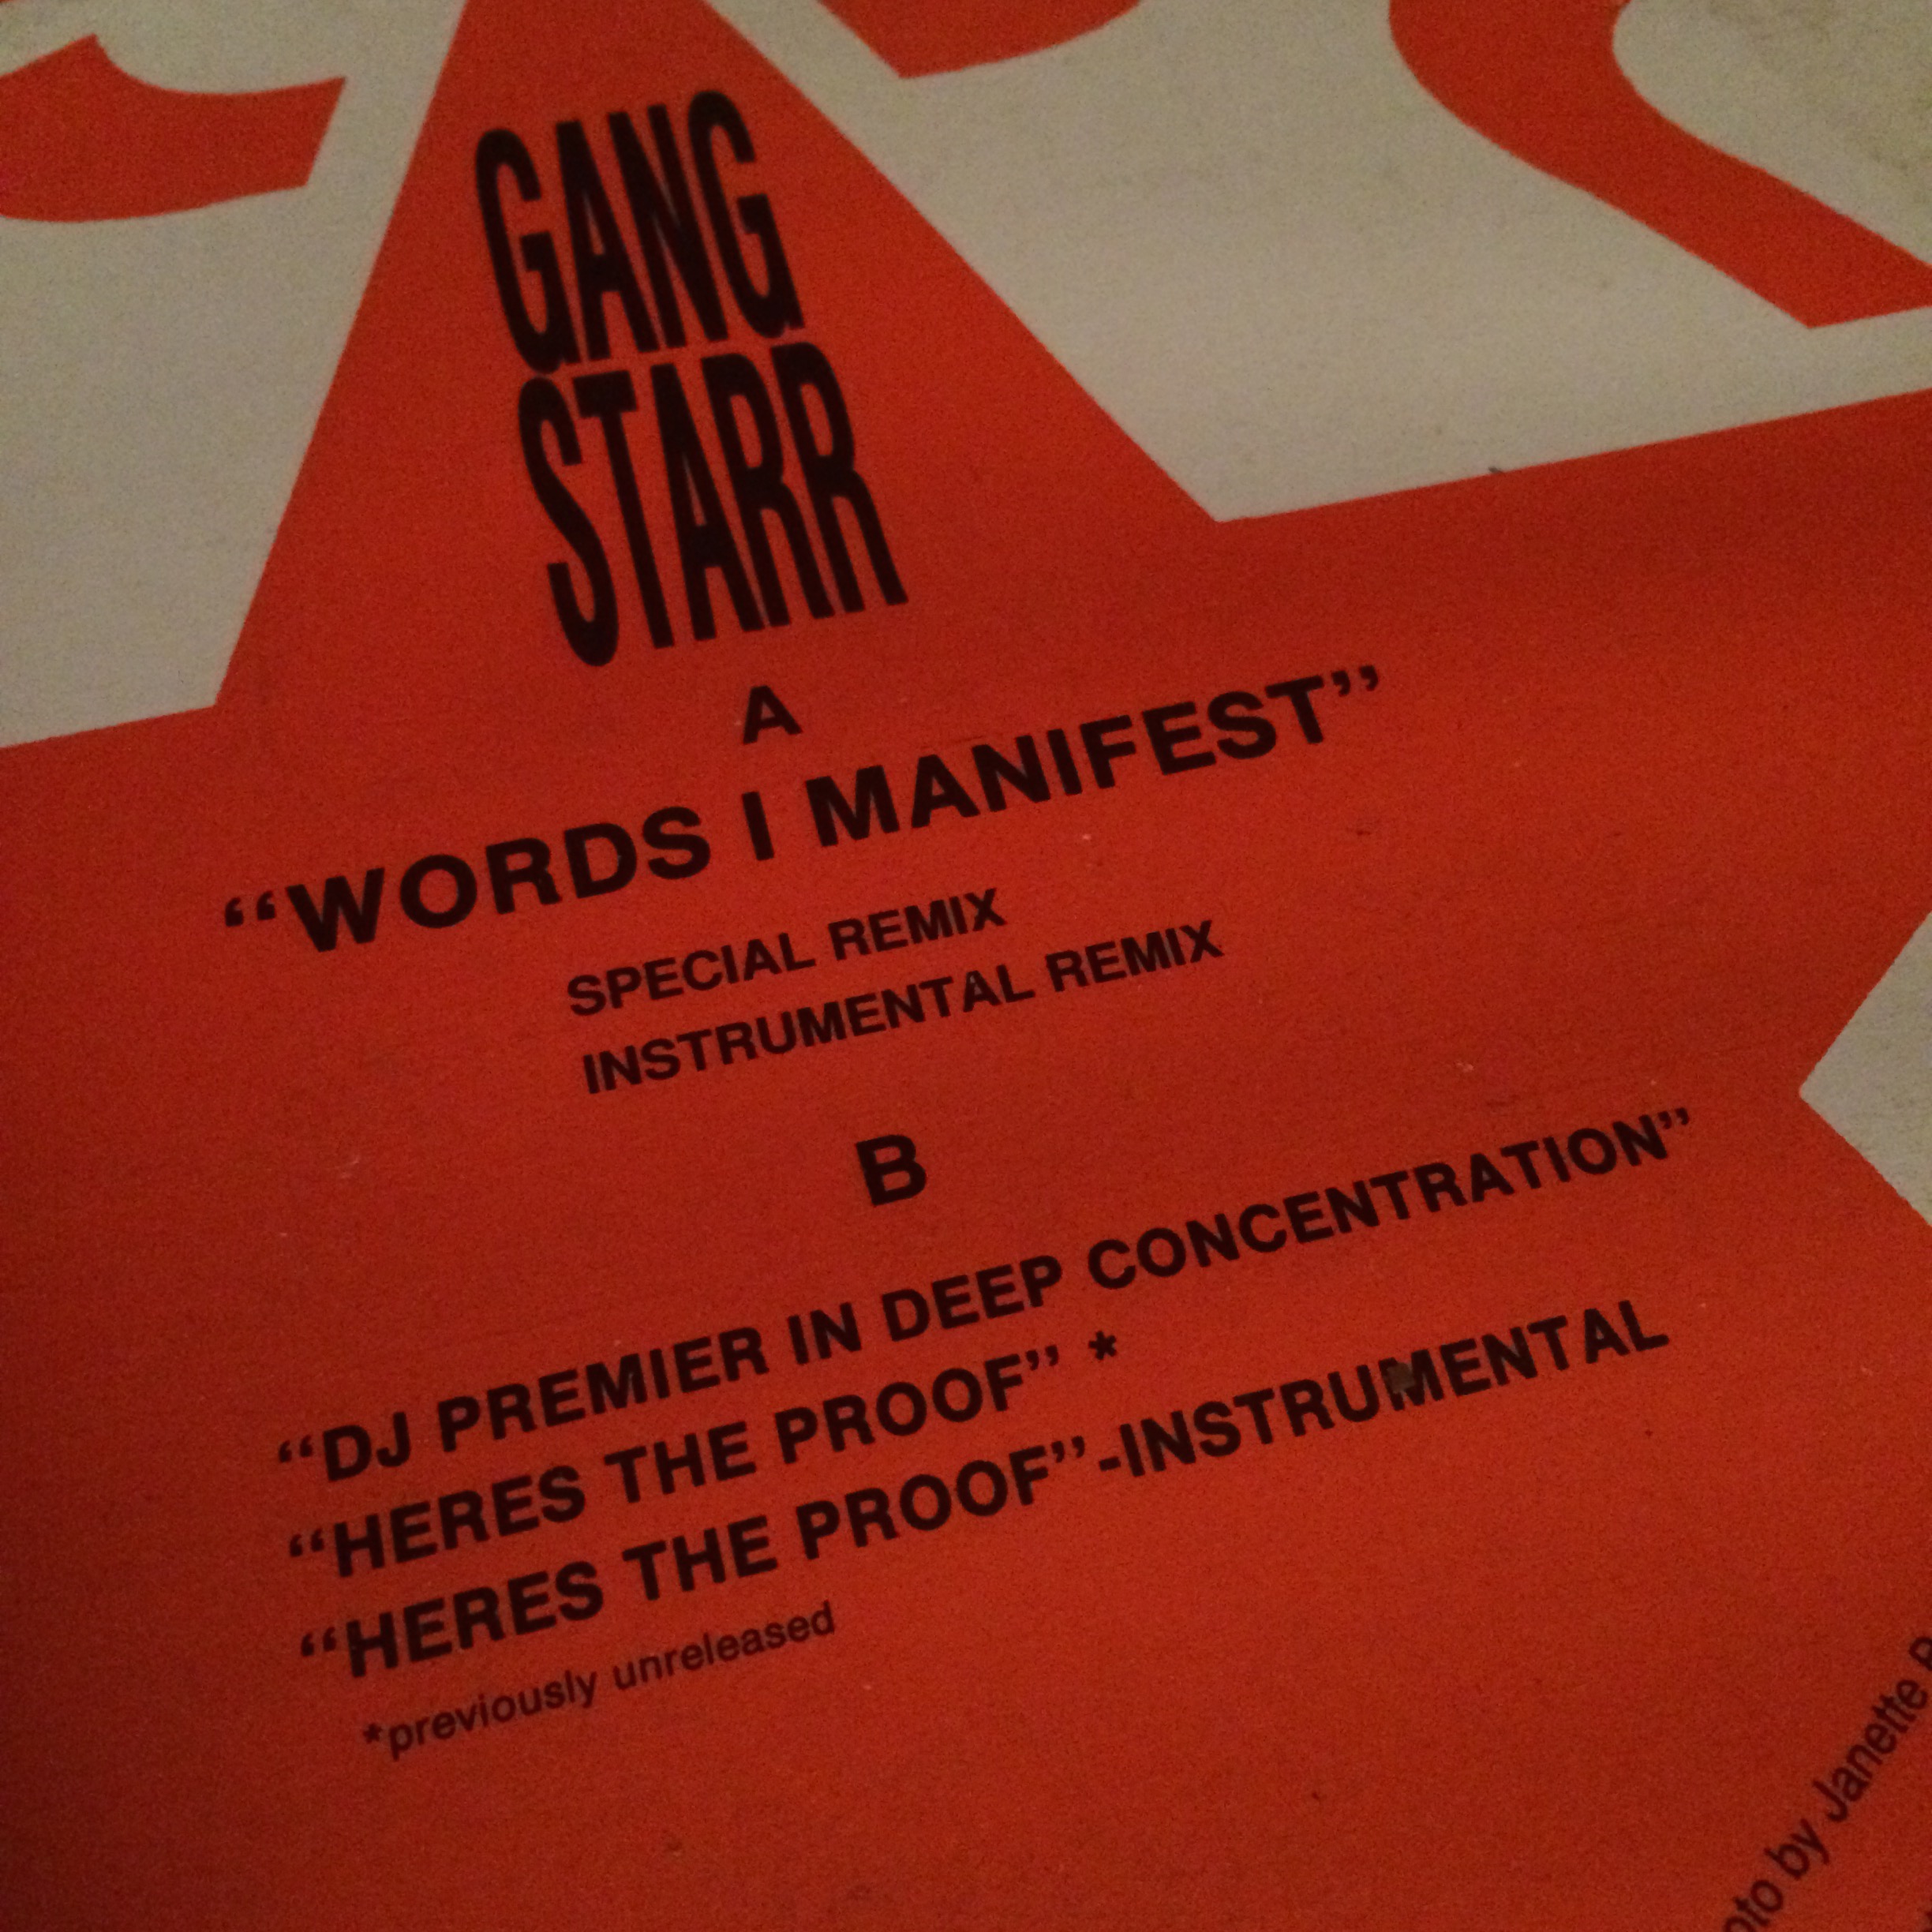 Words I Manfest Remixes